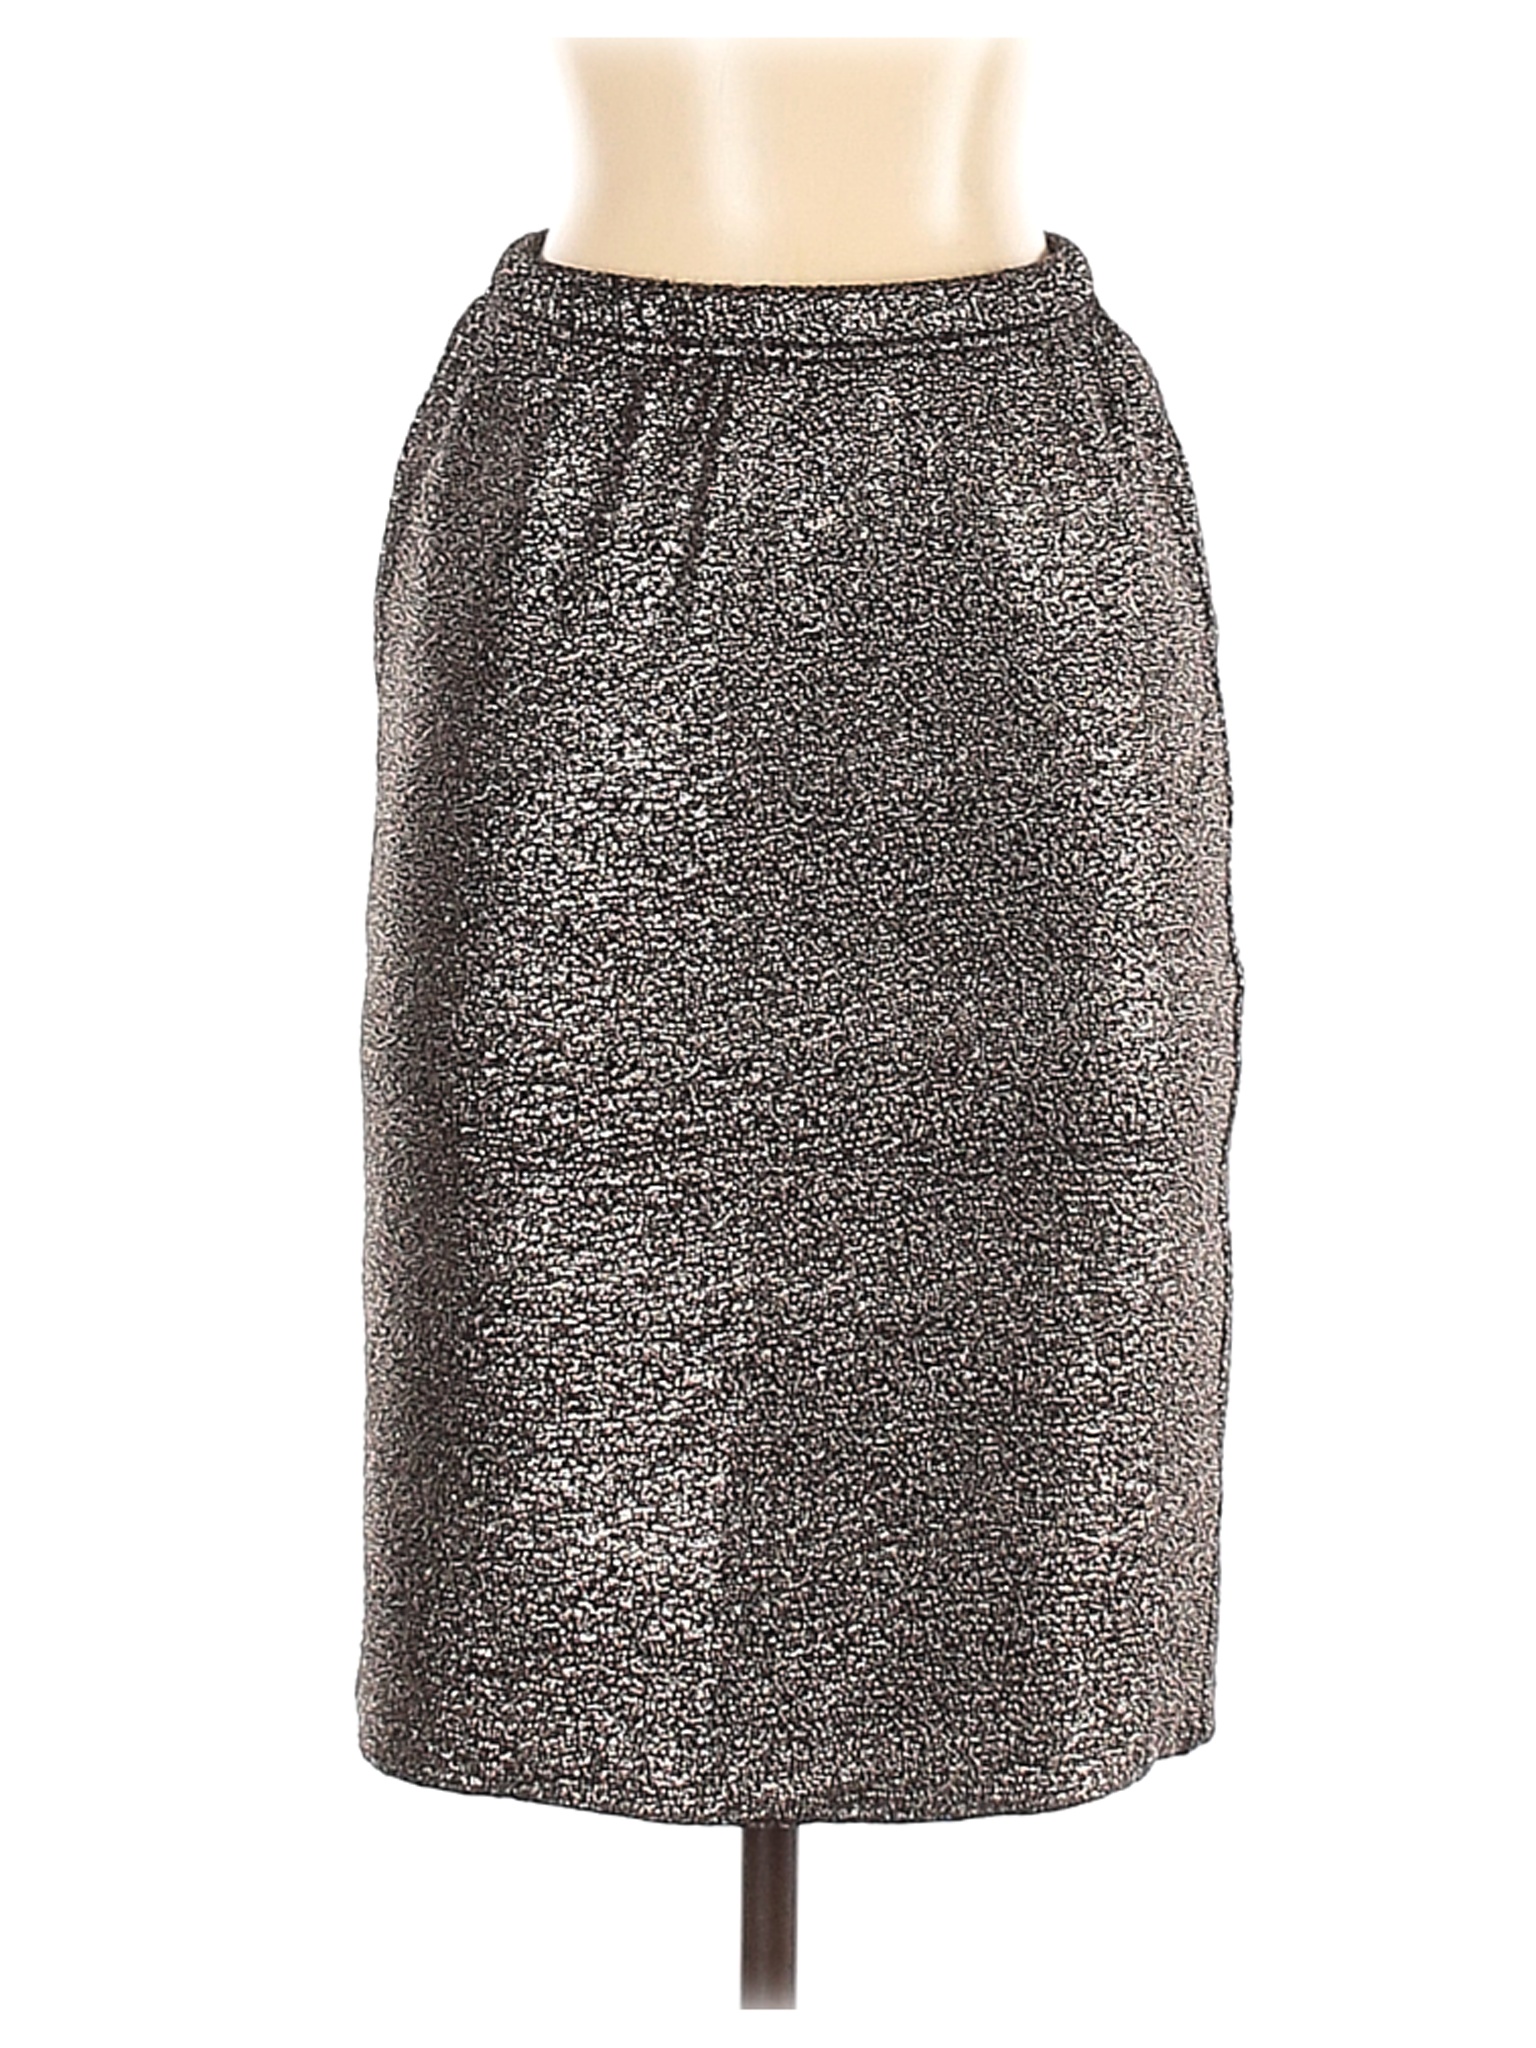 NWT Philosophy Republic Clothing Women Brown Casual Skirt XS | eBay